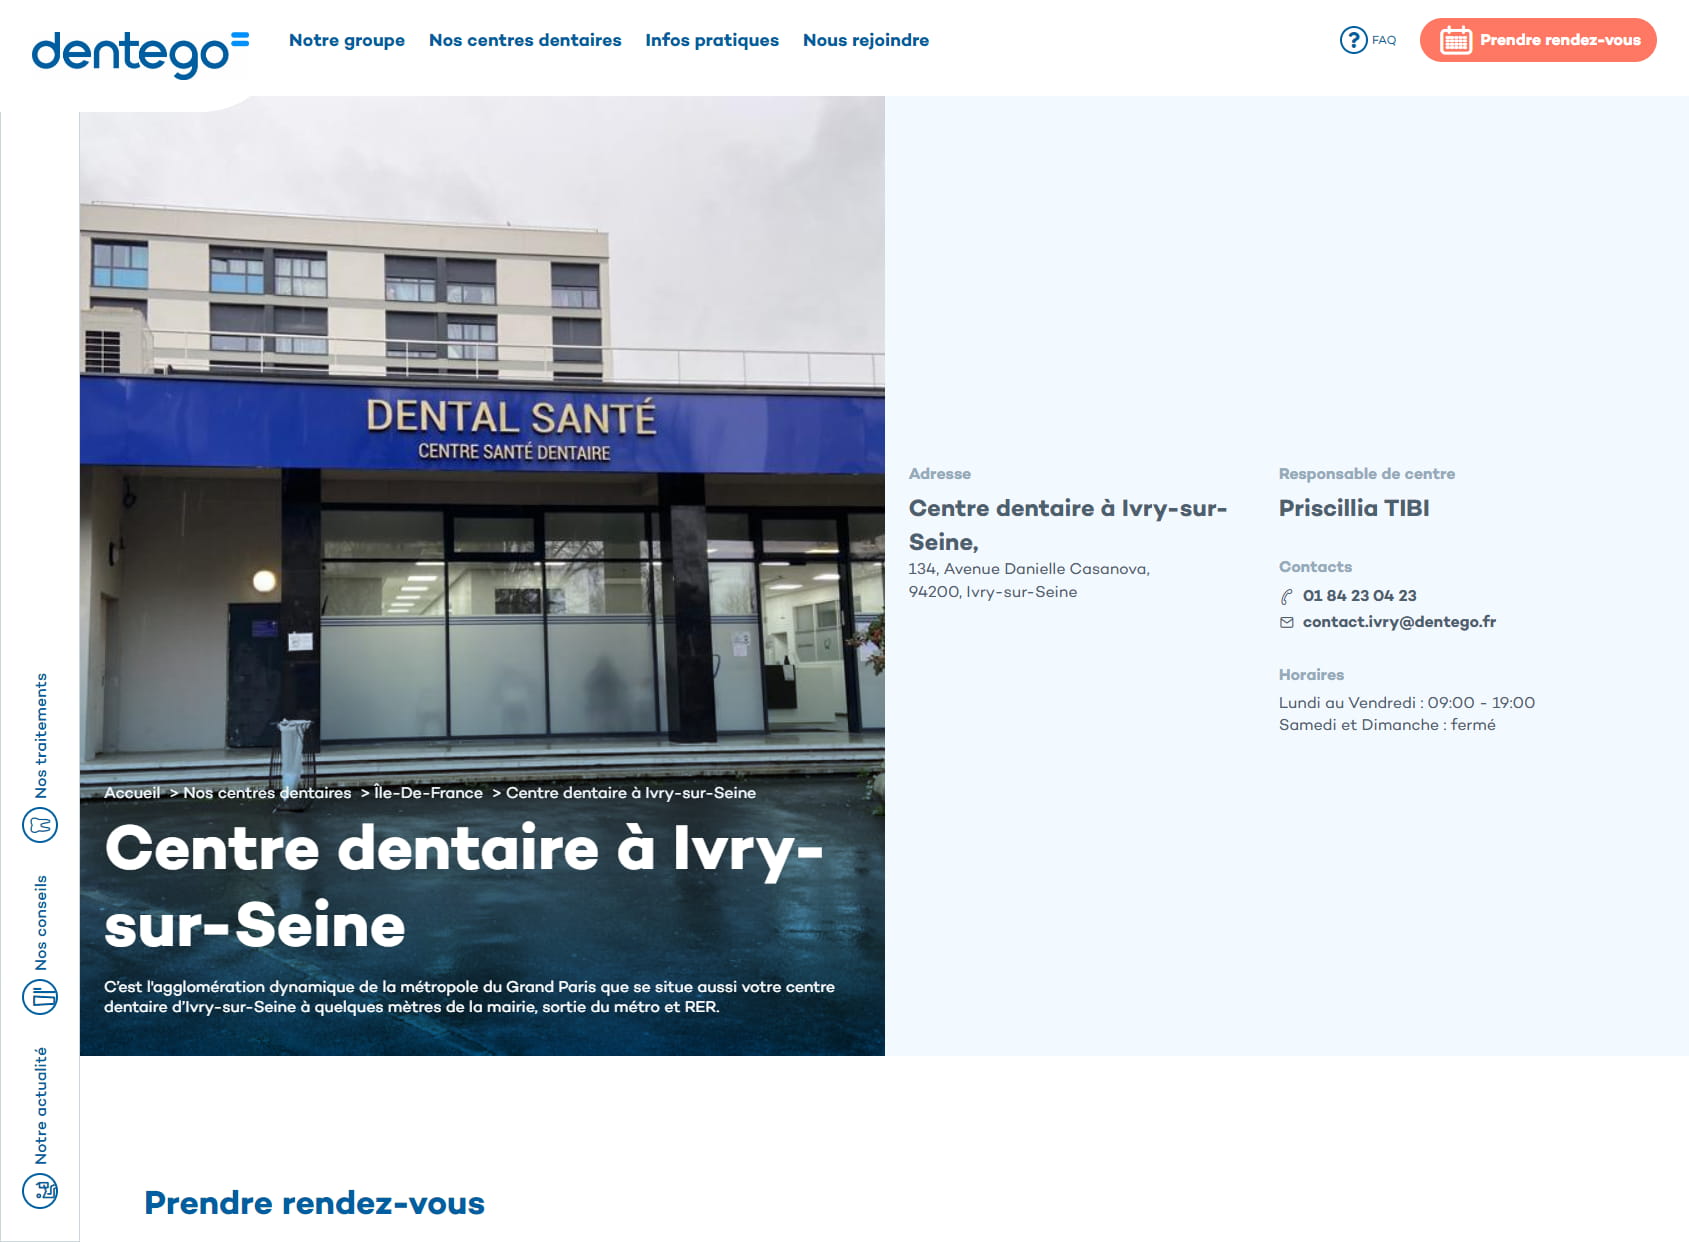 Centre Dentaire Ivry-sur-Seine : Dentiste Ivry-sur-Seine - Dental Santé